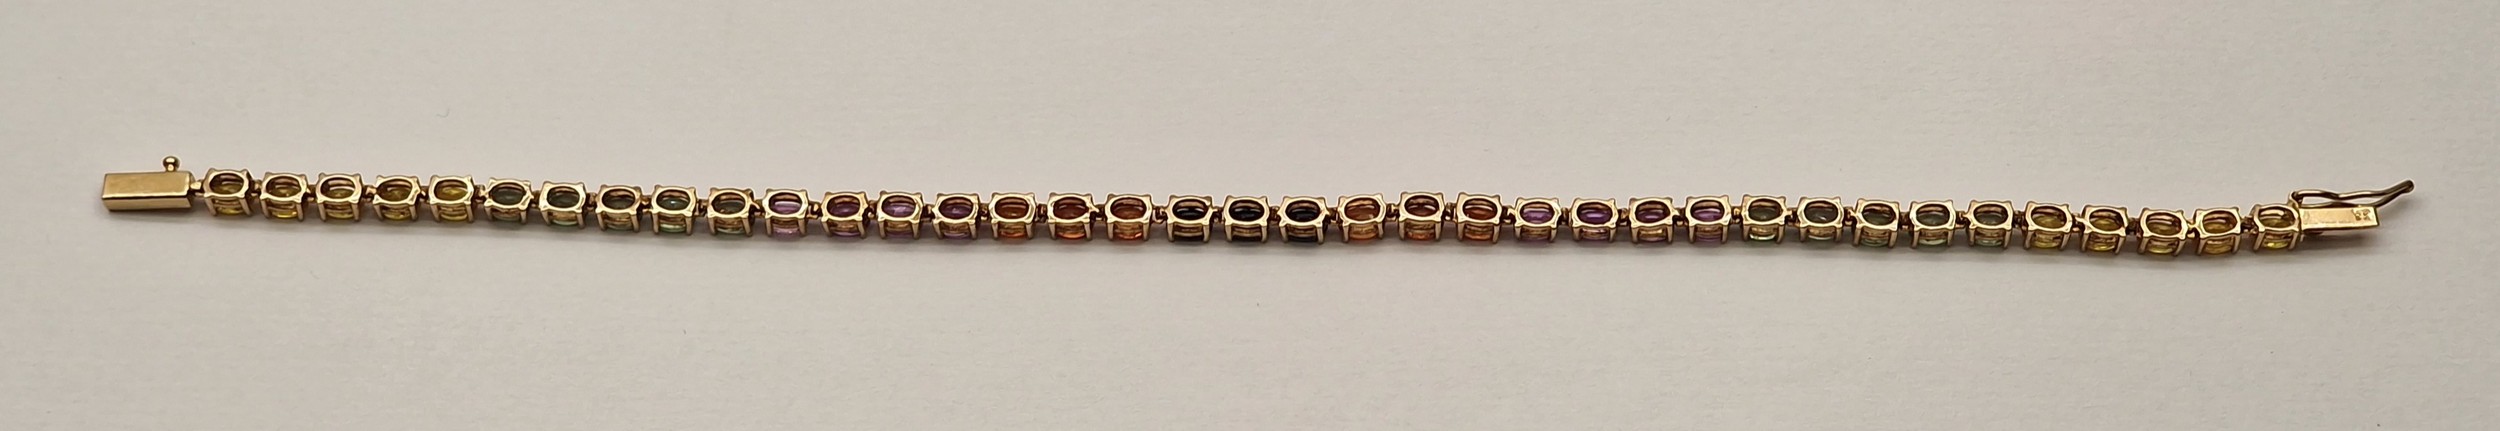 Bracelet 9ct gold 6.5g multi stone including sapphire, 7.5" - Image 5 of 5